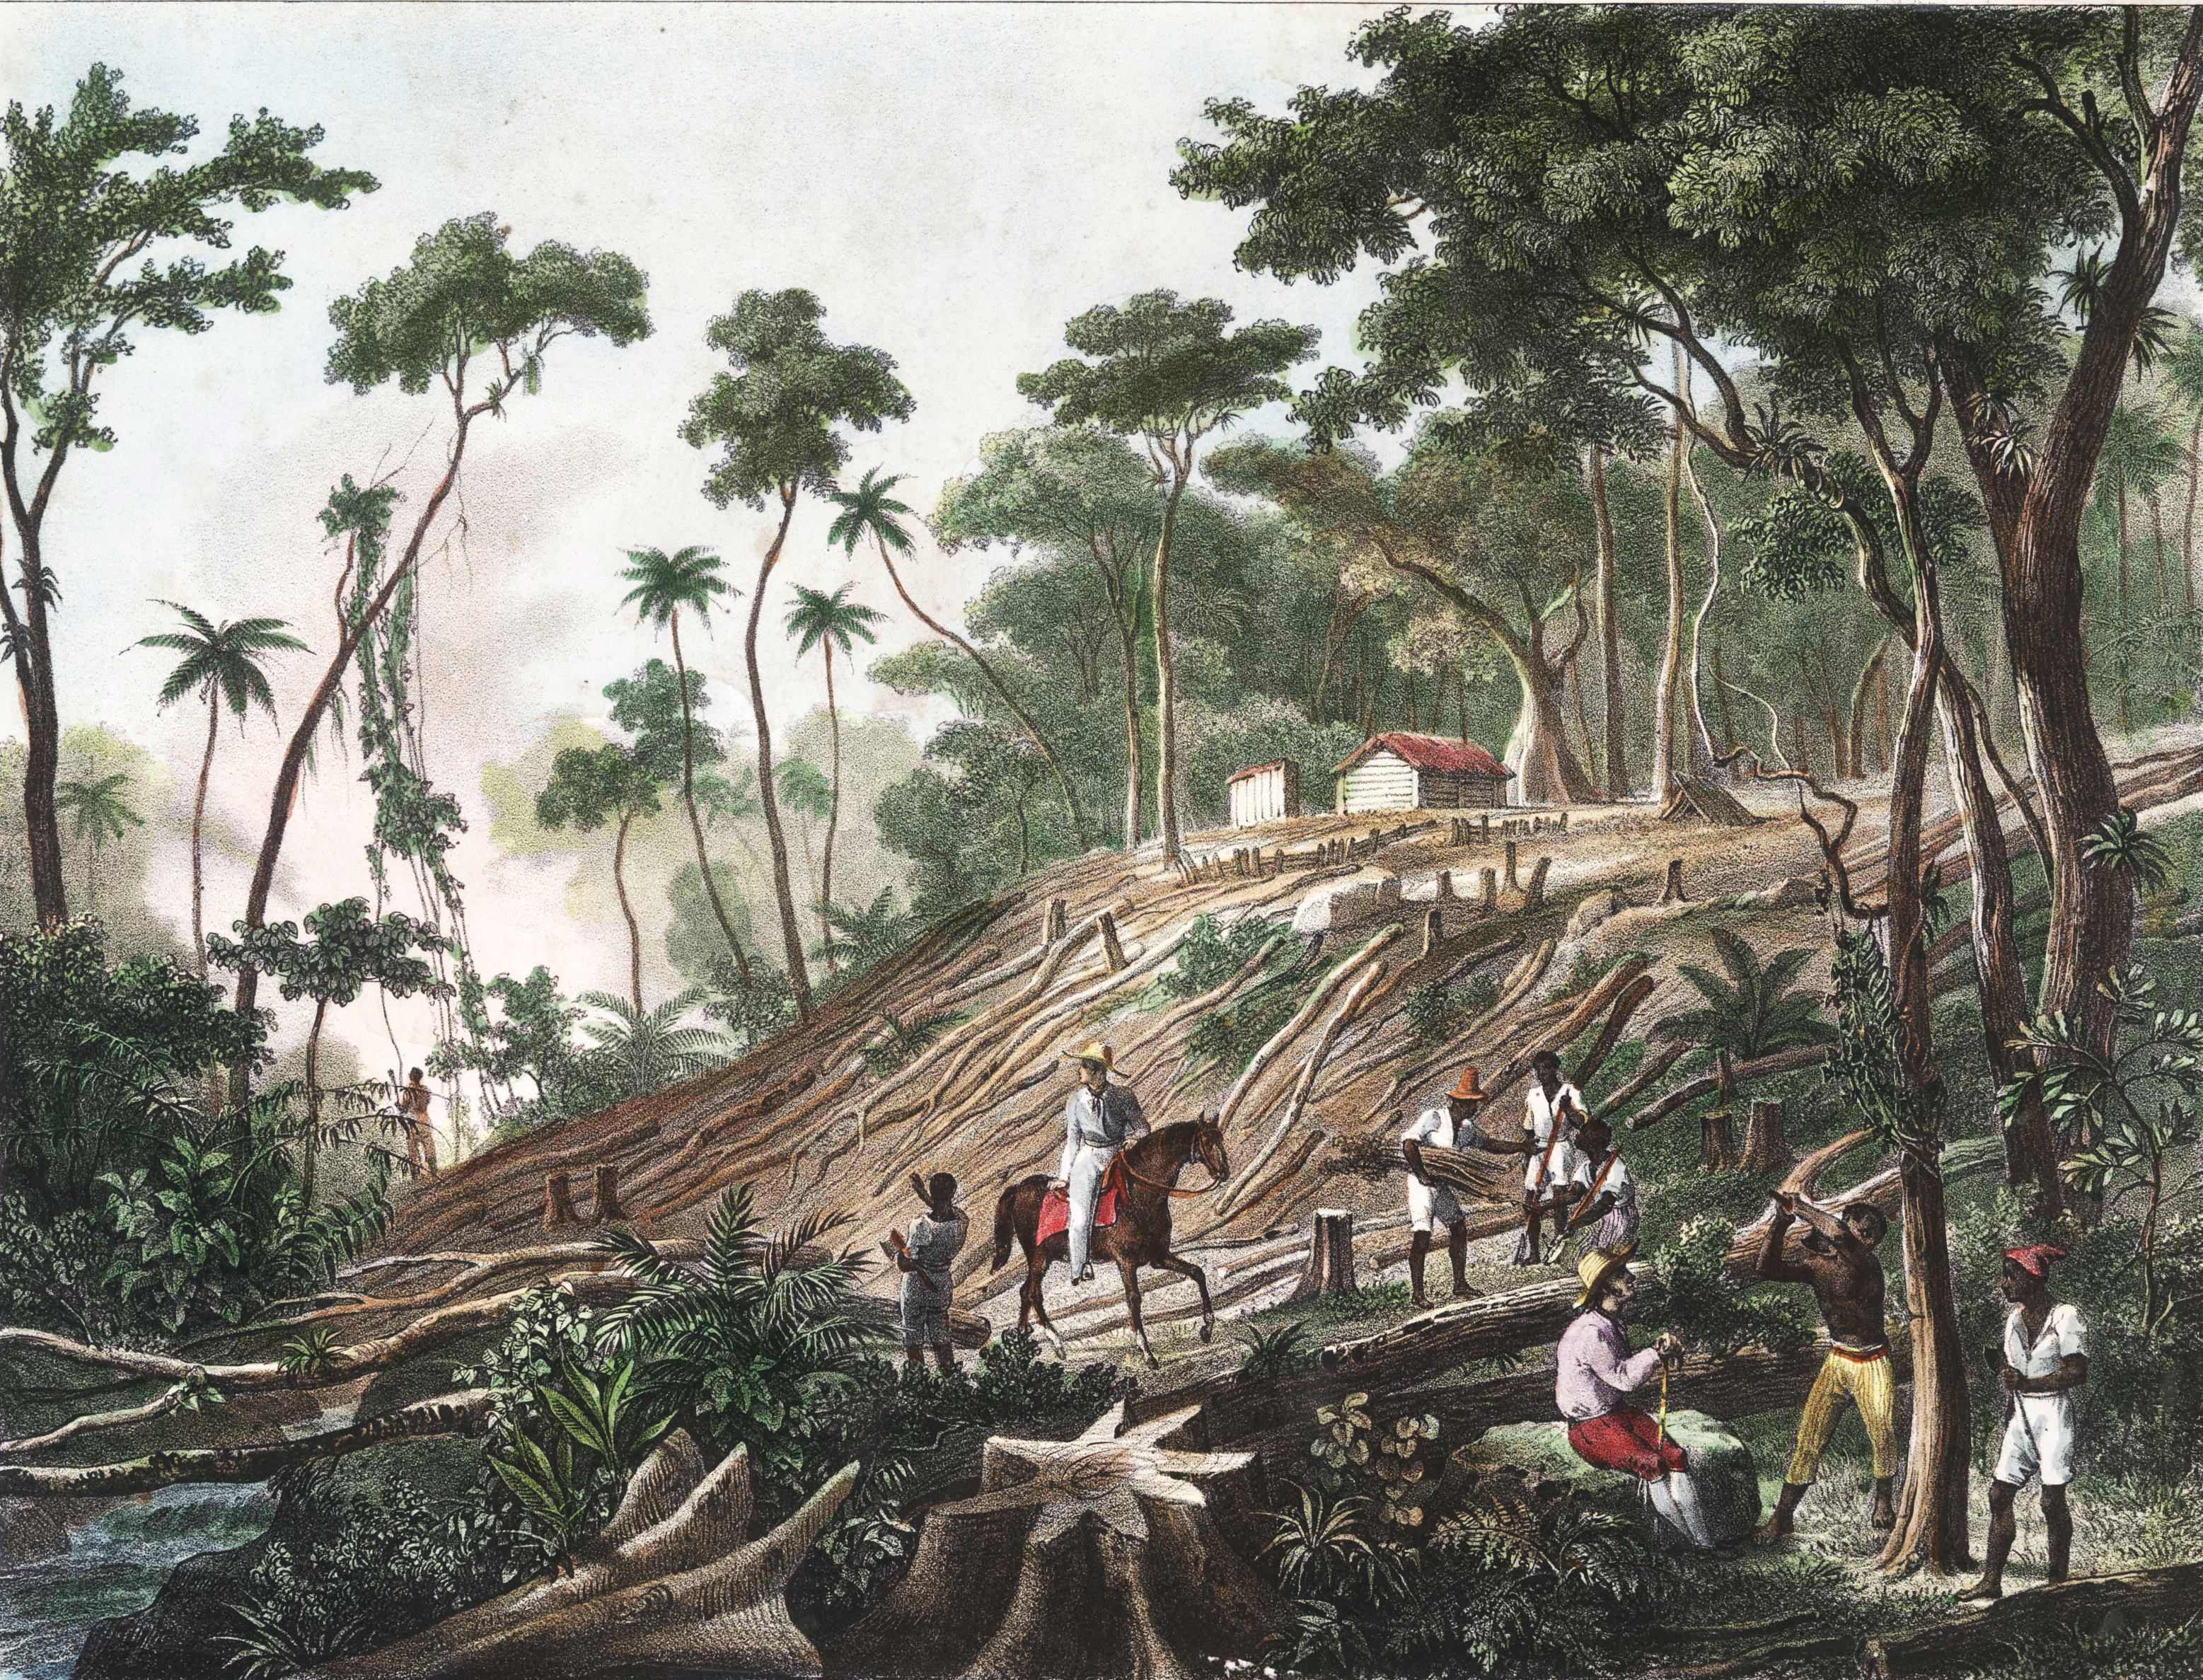 (2) Defrichement d´une forêt. Johann Moritz Rugendas<br> Acervo da Fundação Biblioteca Nacional - Brasil